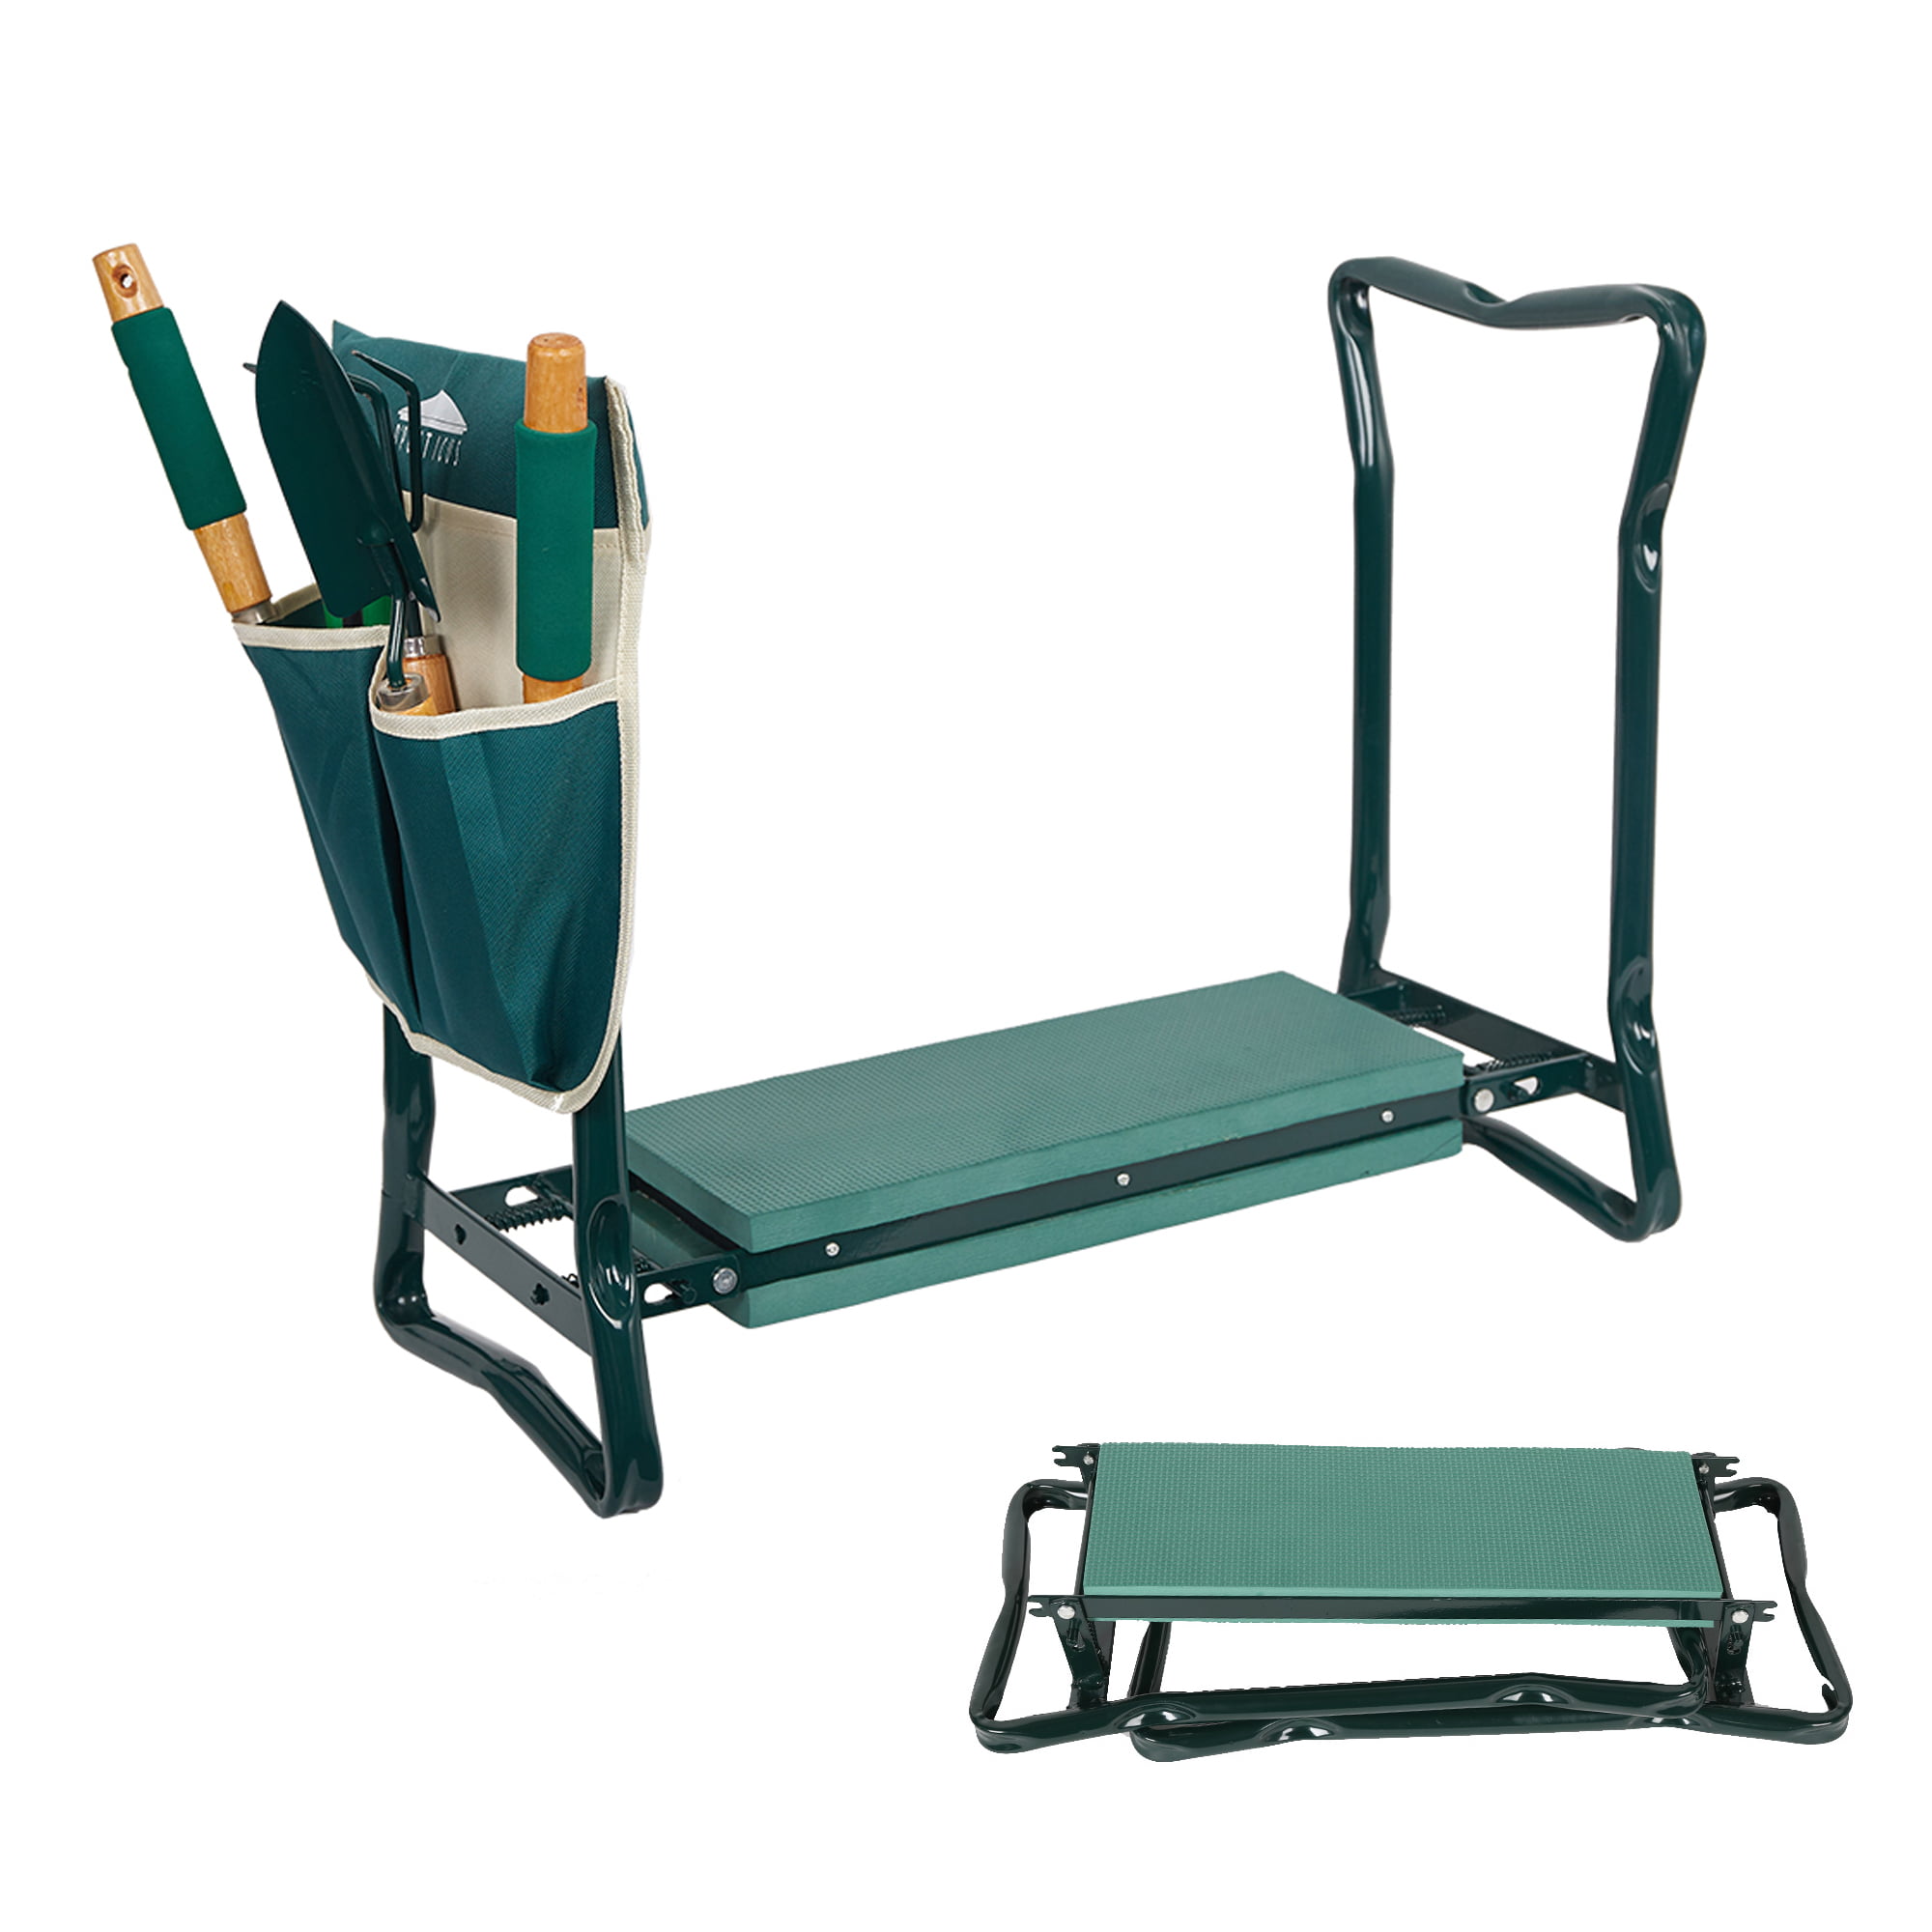 Karmasfar Product Folding Garden Kneeler And Seat Garden Bench Sturdy Garden Stools With Soft